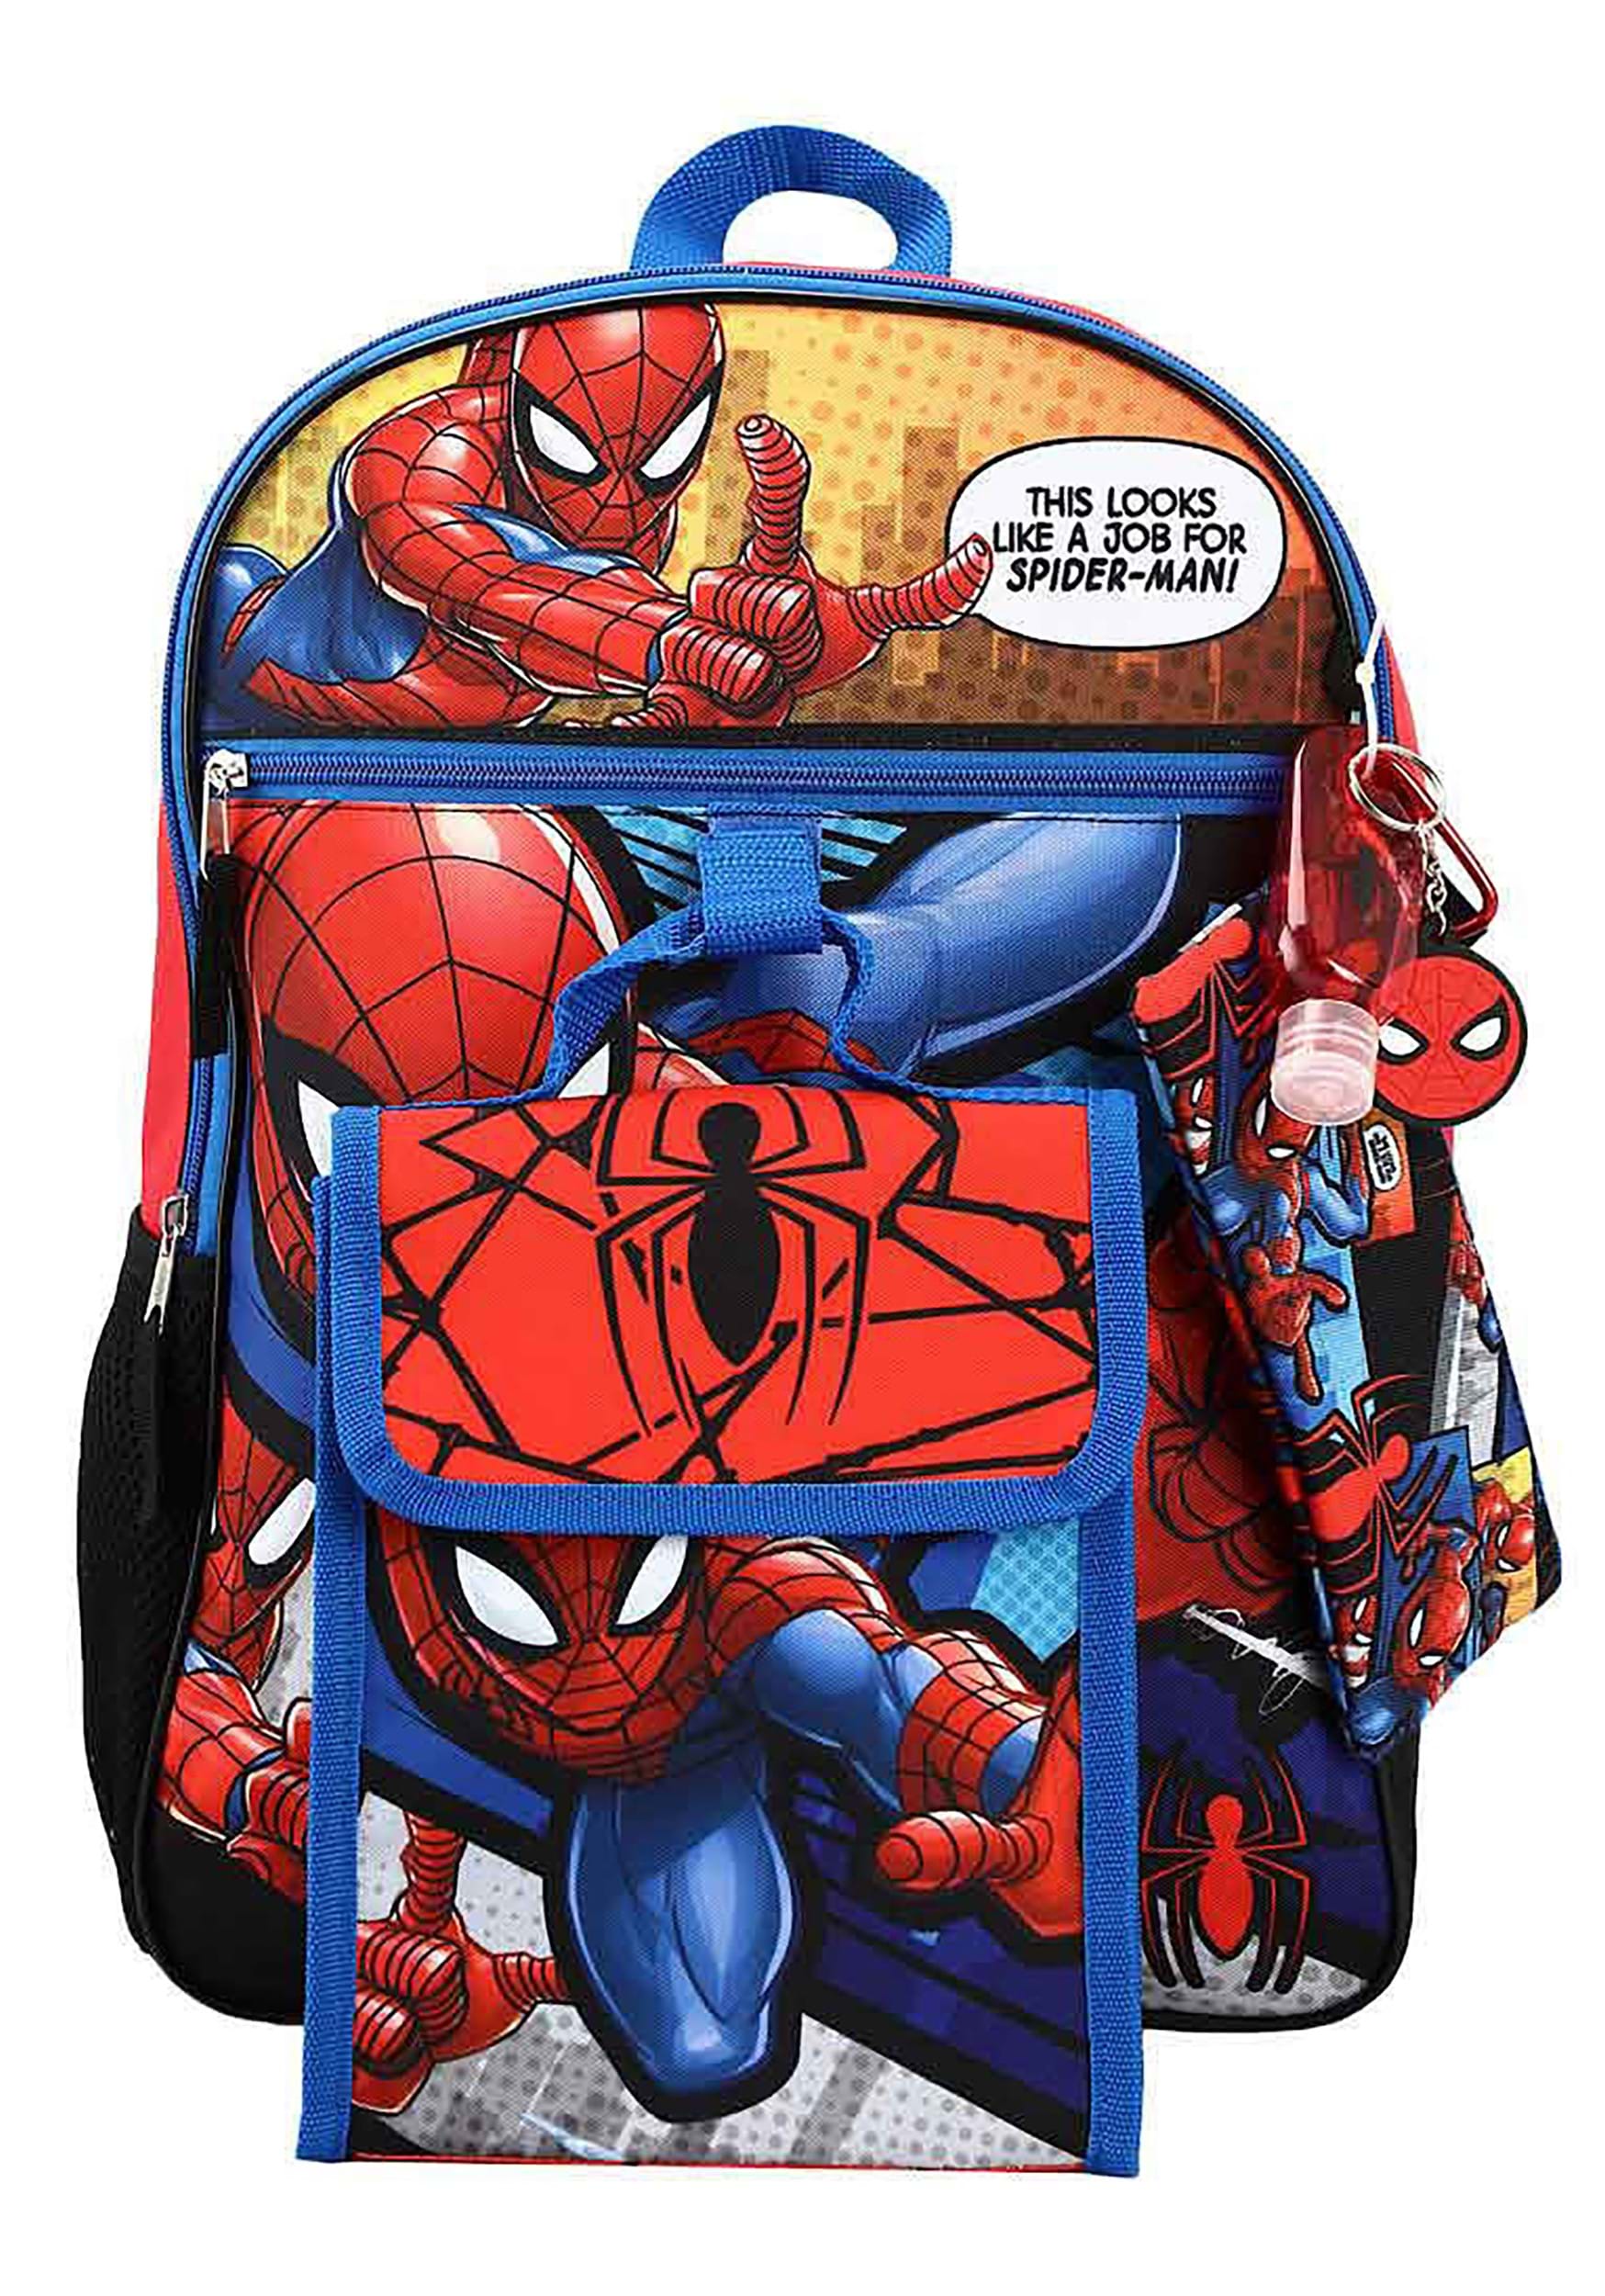 Disney Princess 6-Piece Backpack Set